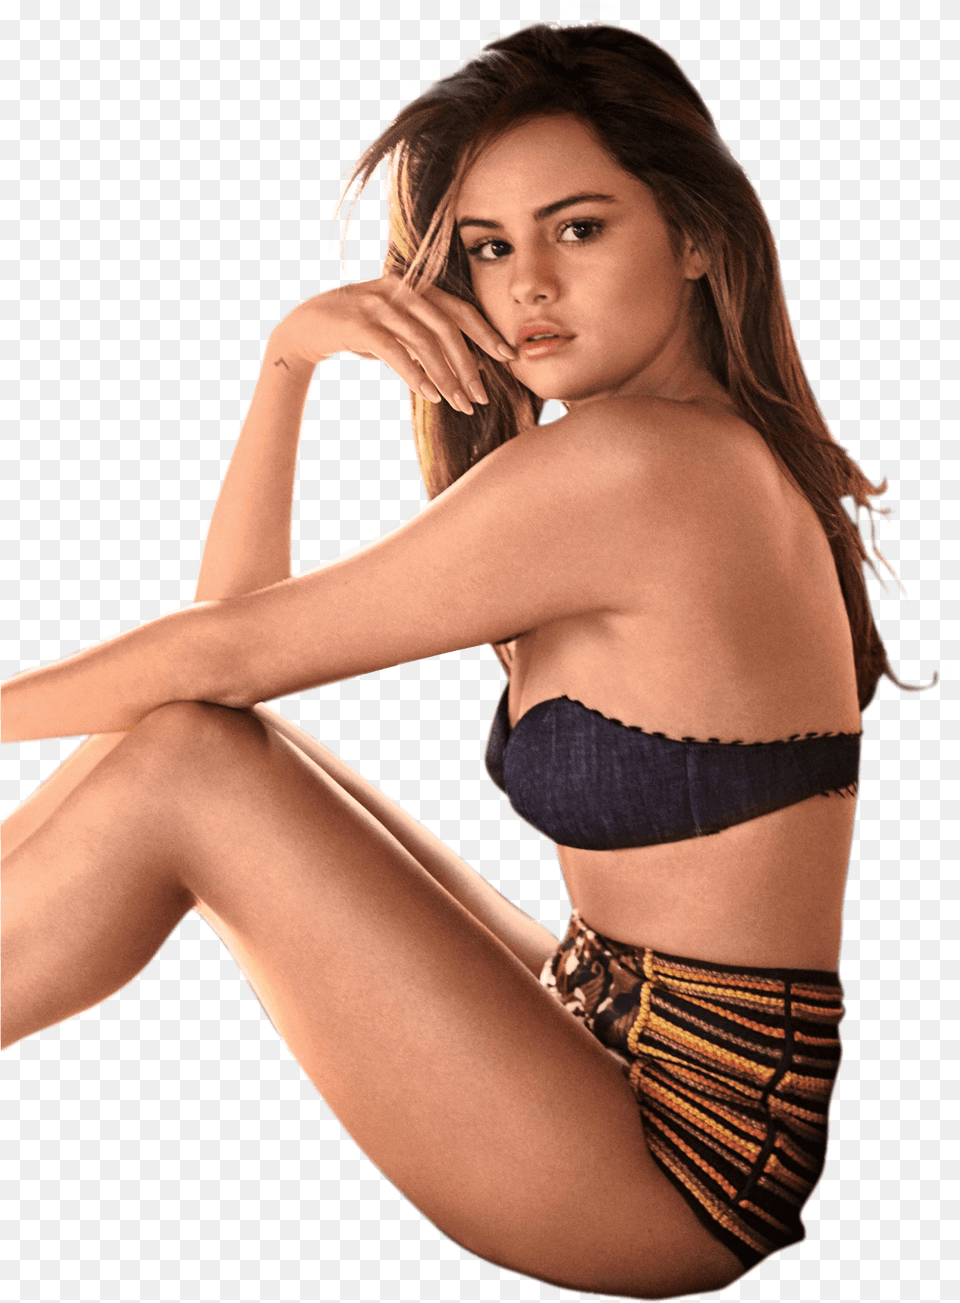 Selena Gomez Hot Pictures Bikini And Fashion Style Selena Gomez Wears Diaper, Underwear, Swimwear, Bra, Clothing Free Transparent Png